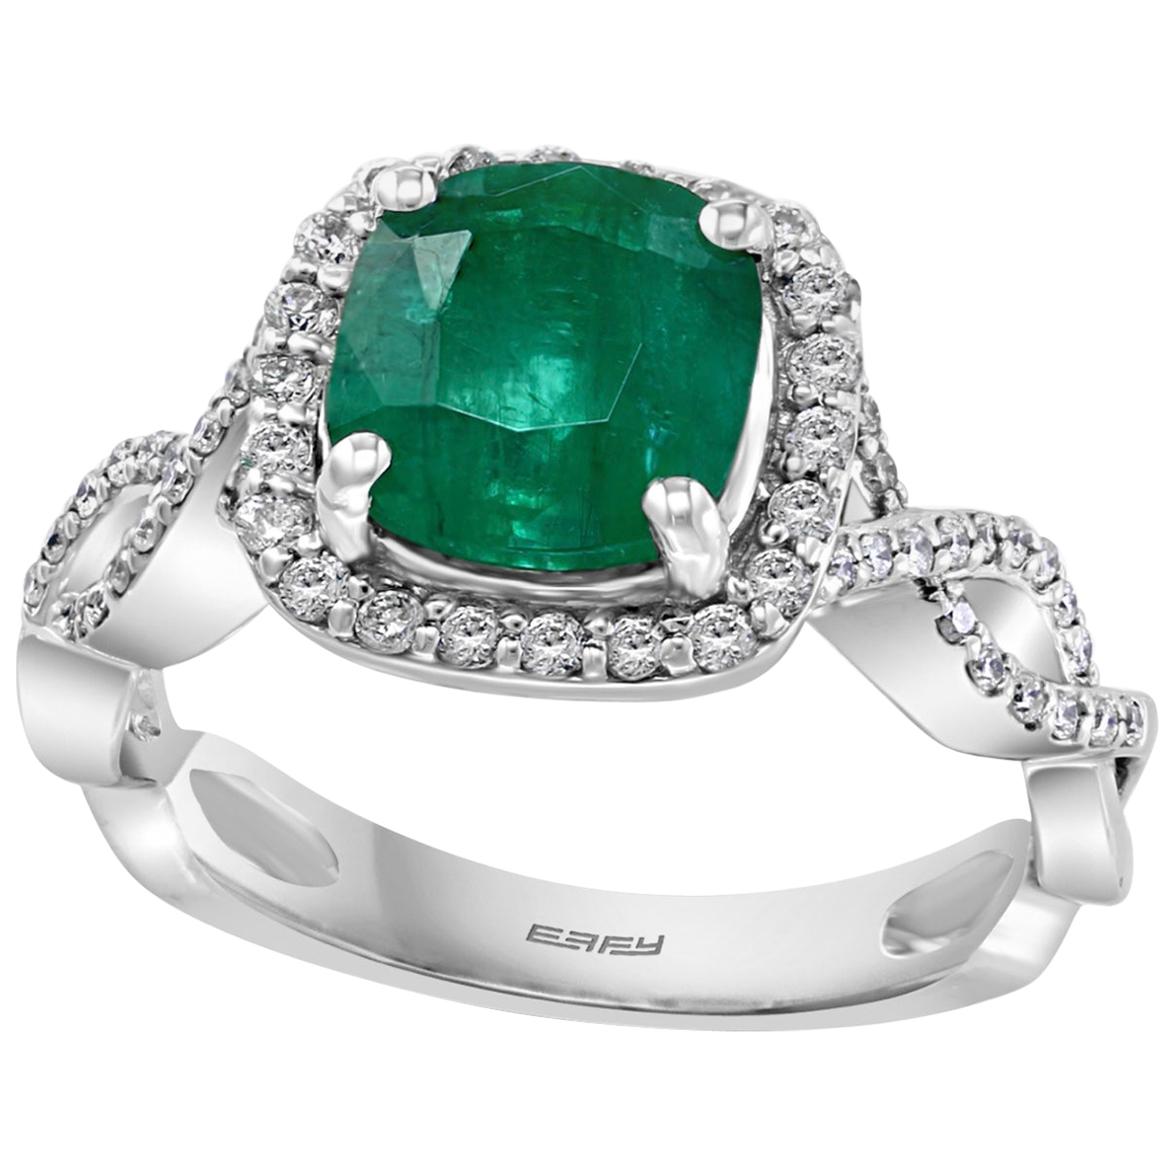 Designer Effy's 1.8 Carat Emerald and Diamond Cocktail Ring 14 Karat White Gold